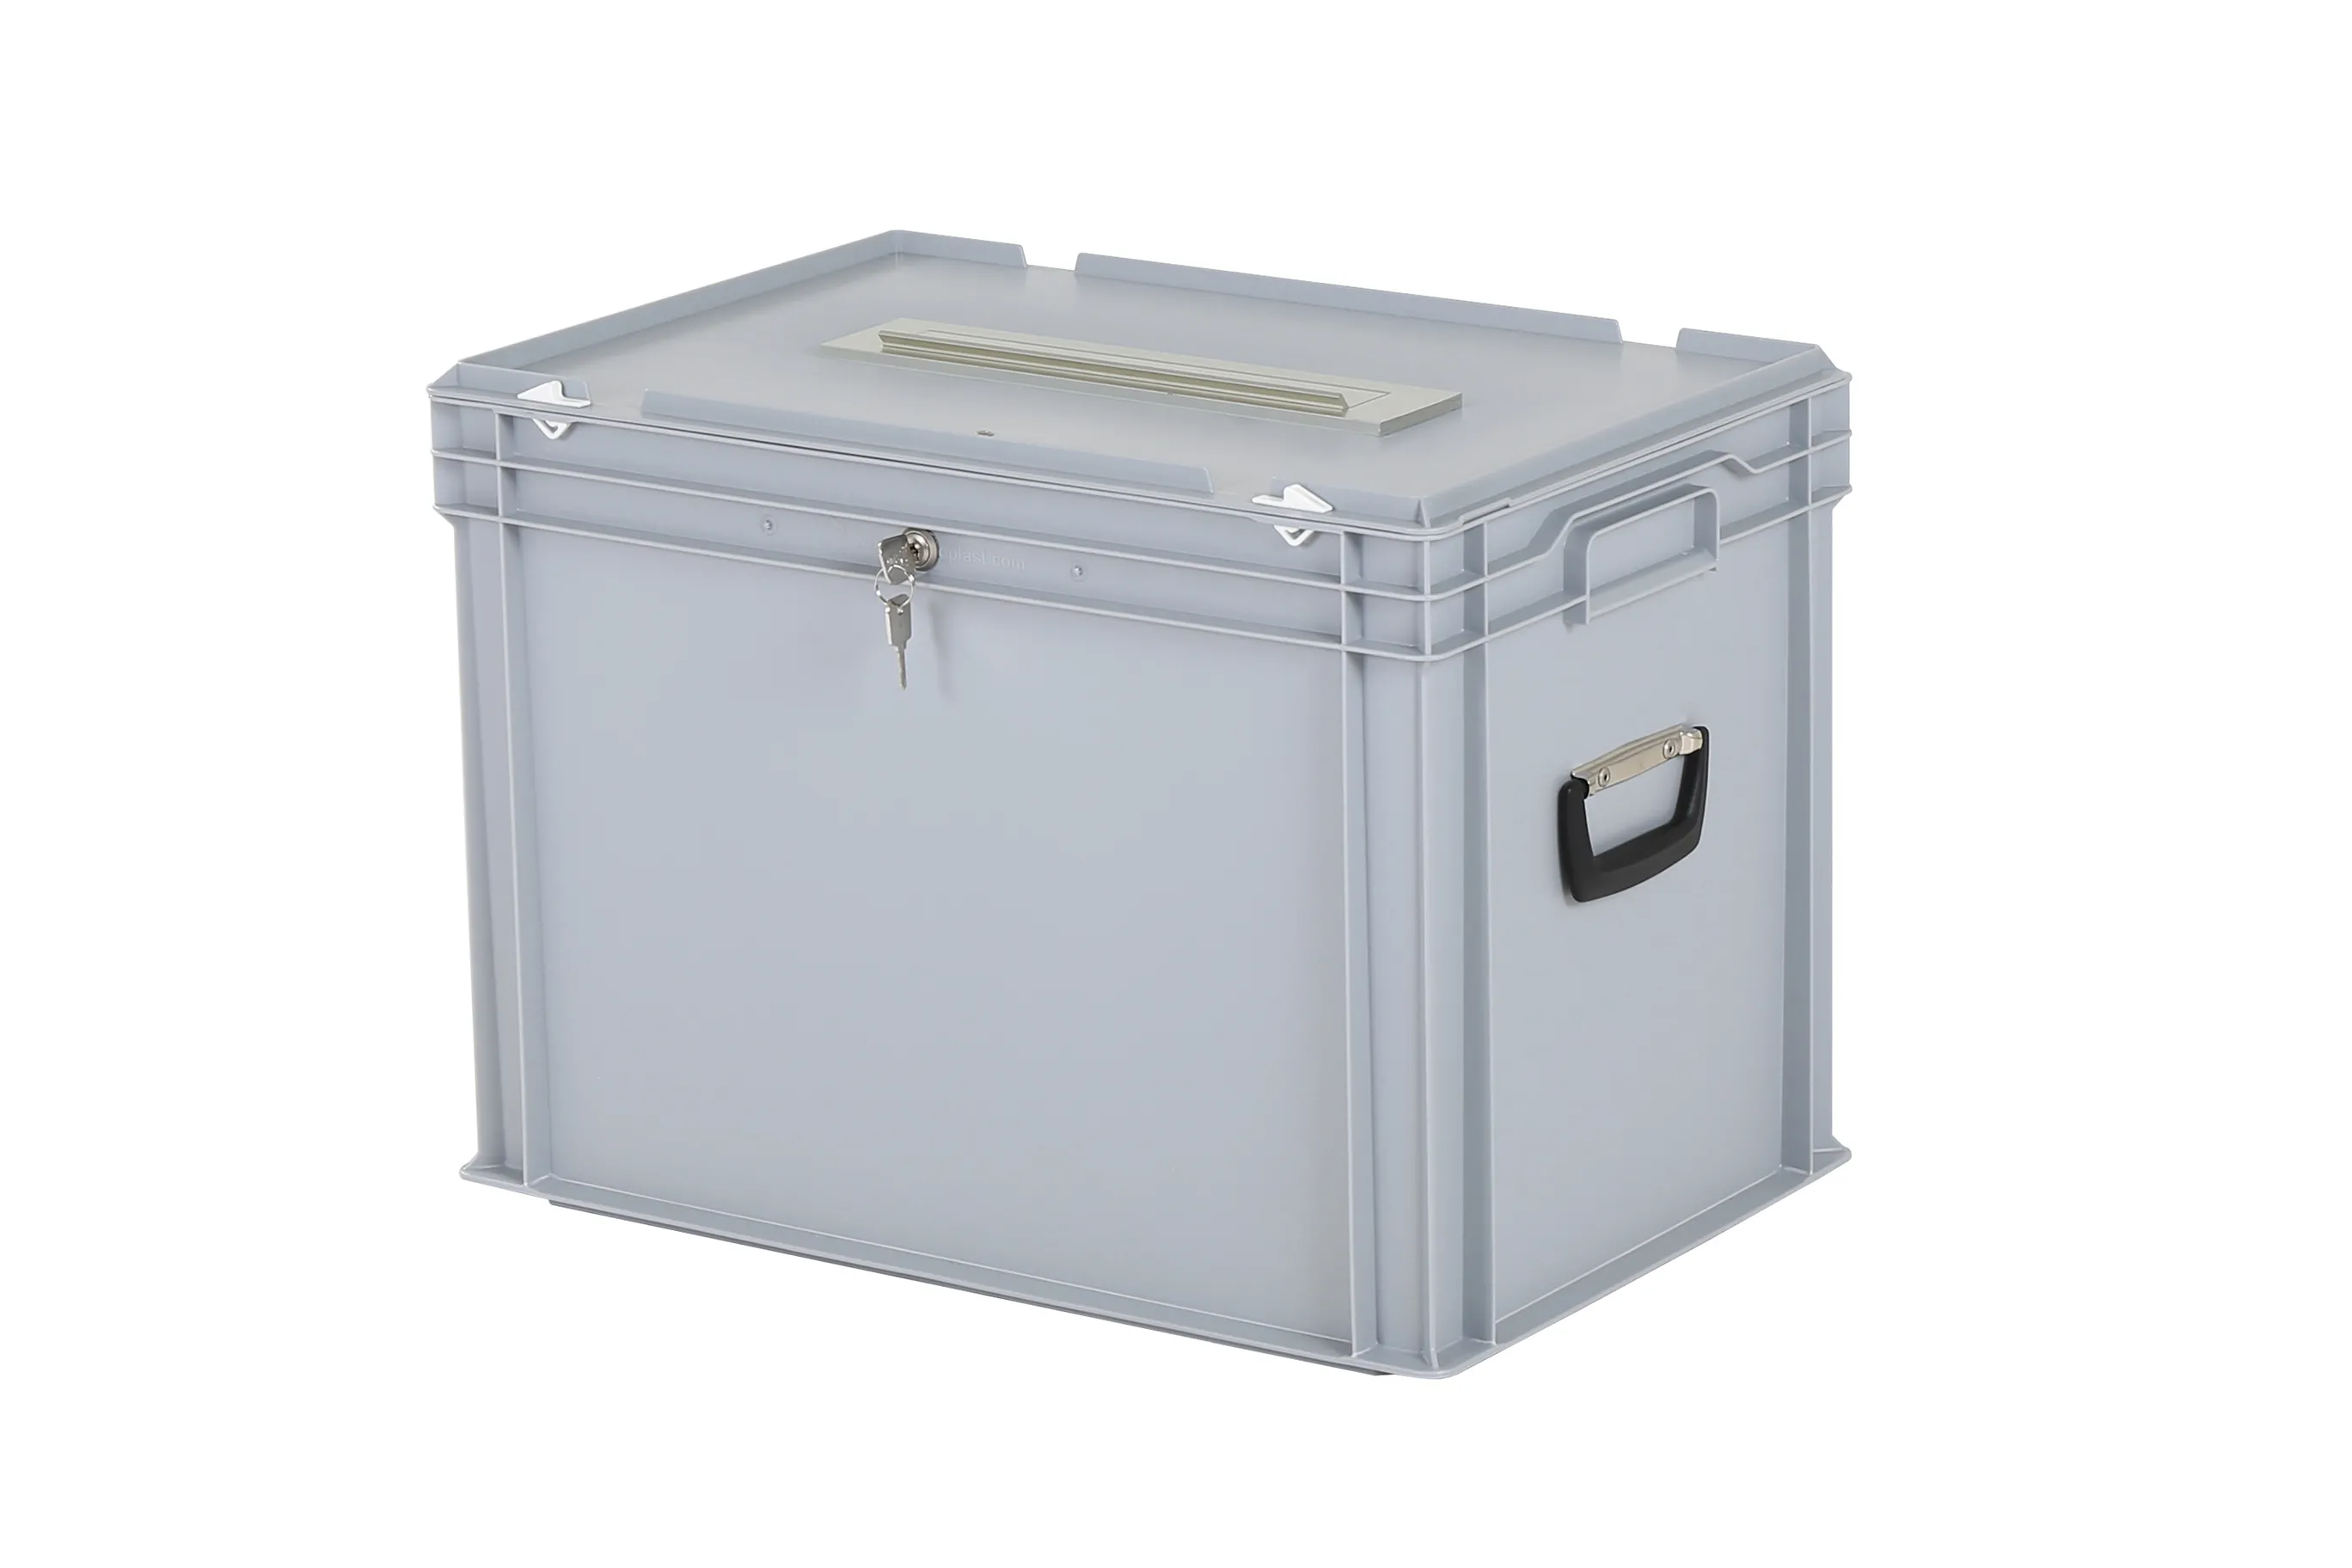 Stembus | Transportbox met brievenbusklep en slot - 600 x 400 x H 439 mm - grijs | Enkelsluitend slot